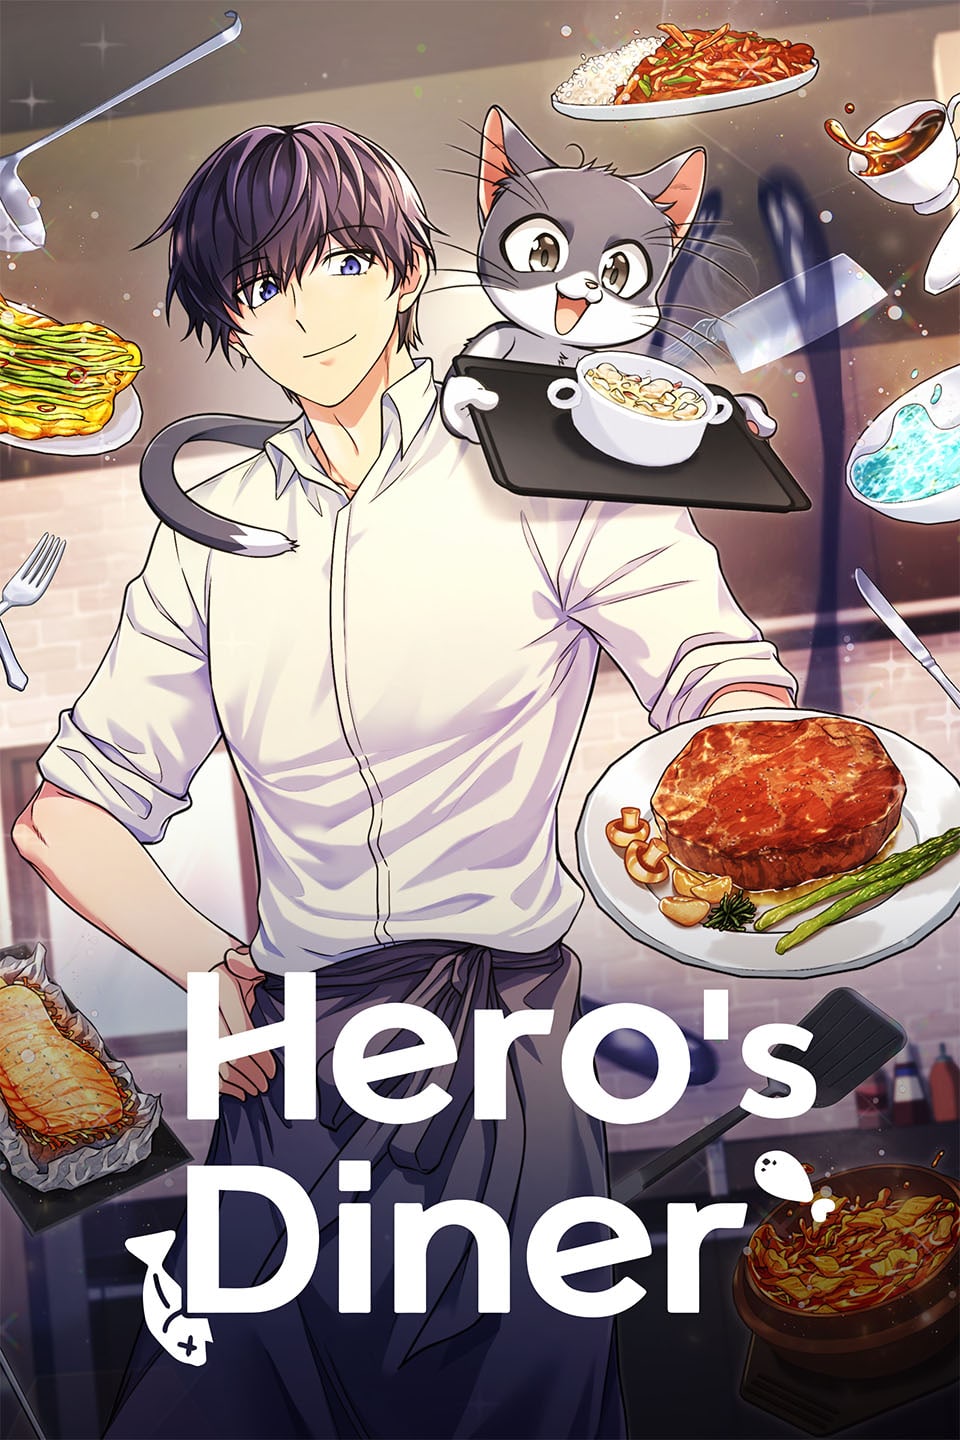 Hero’s Diner